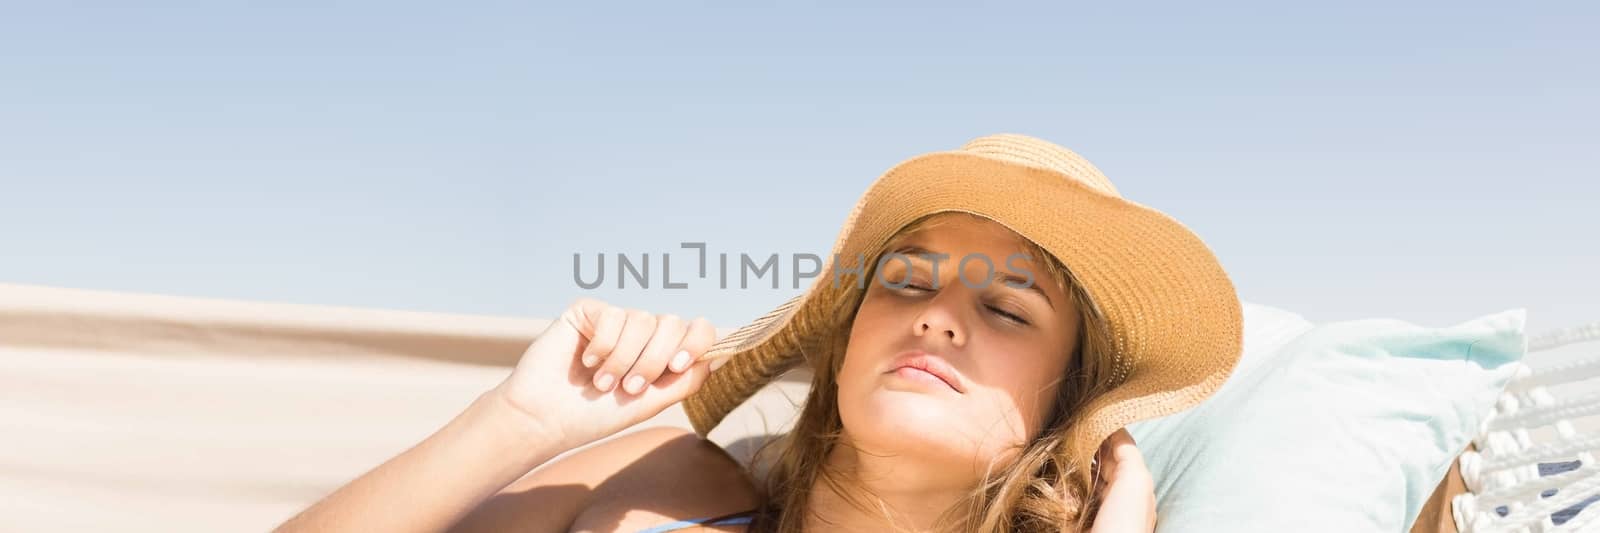 Digital composite of Millennial woman with sun hat asleep on hamoc against Summer sky